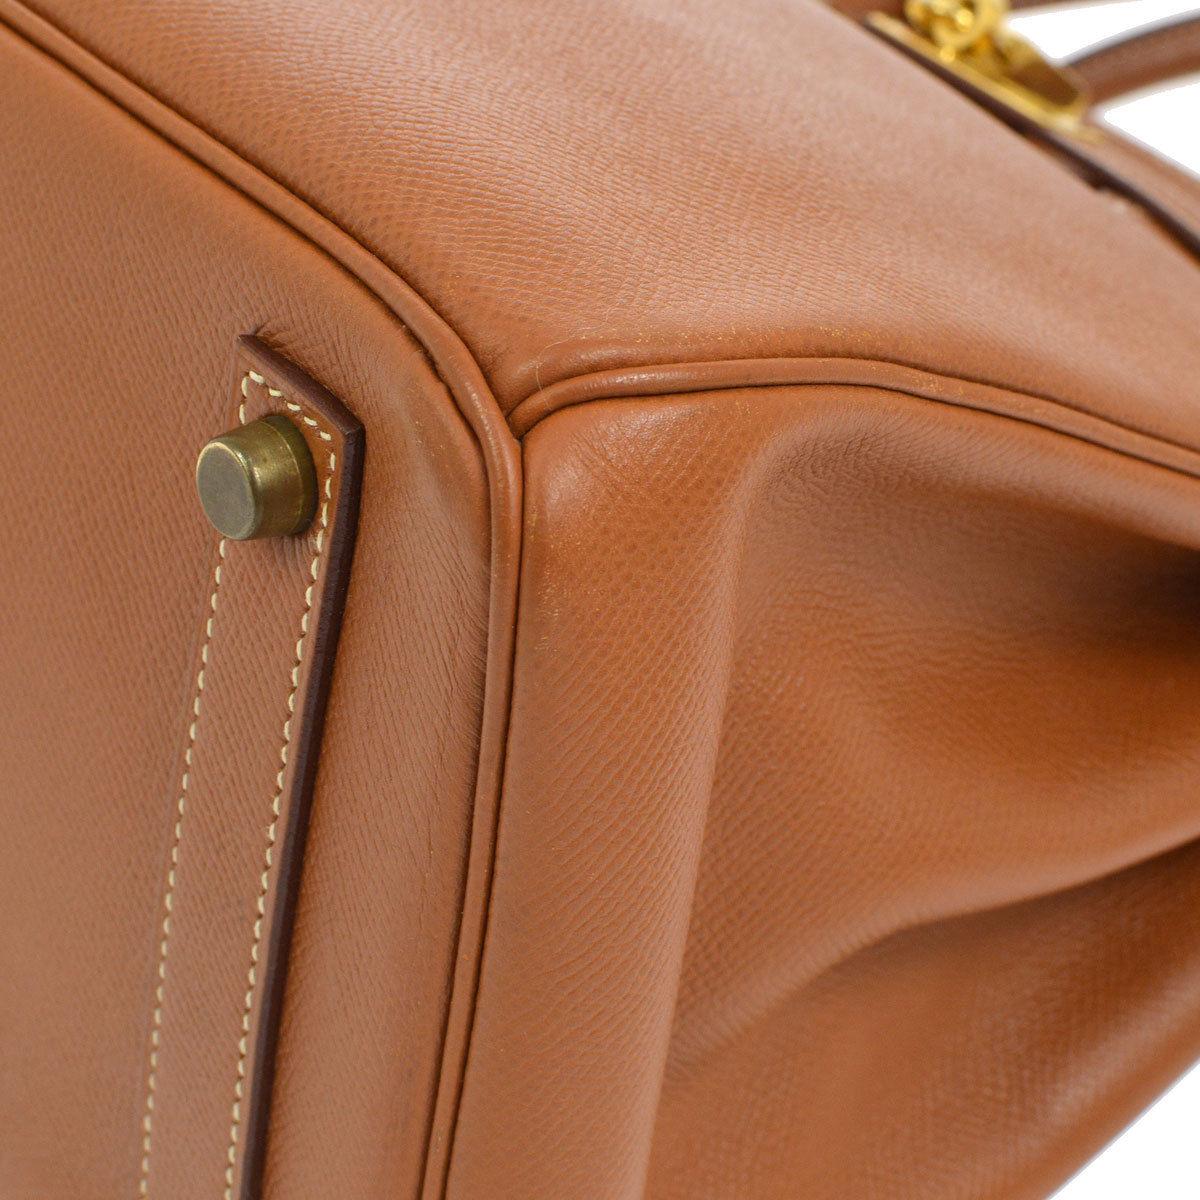 Hermes Birkin 32 Cognac Leather Gold Top Handle Satchel Travel Tote Bag in Box 1